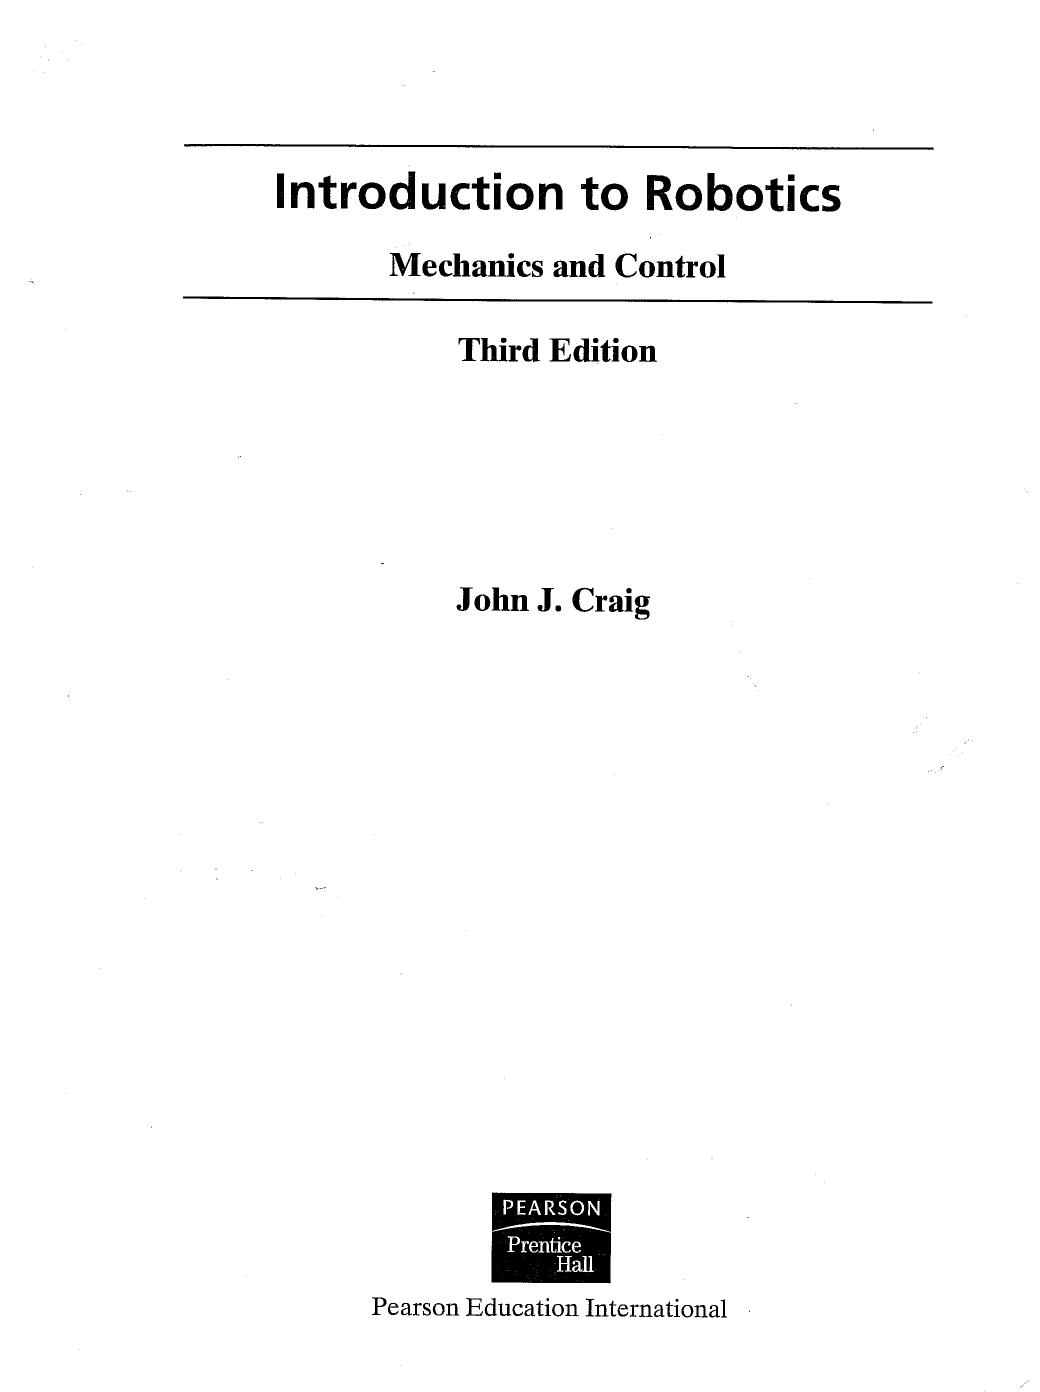 Introduction to Robotics Mechanics and control 3rd Edition 2005